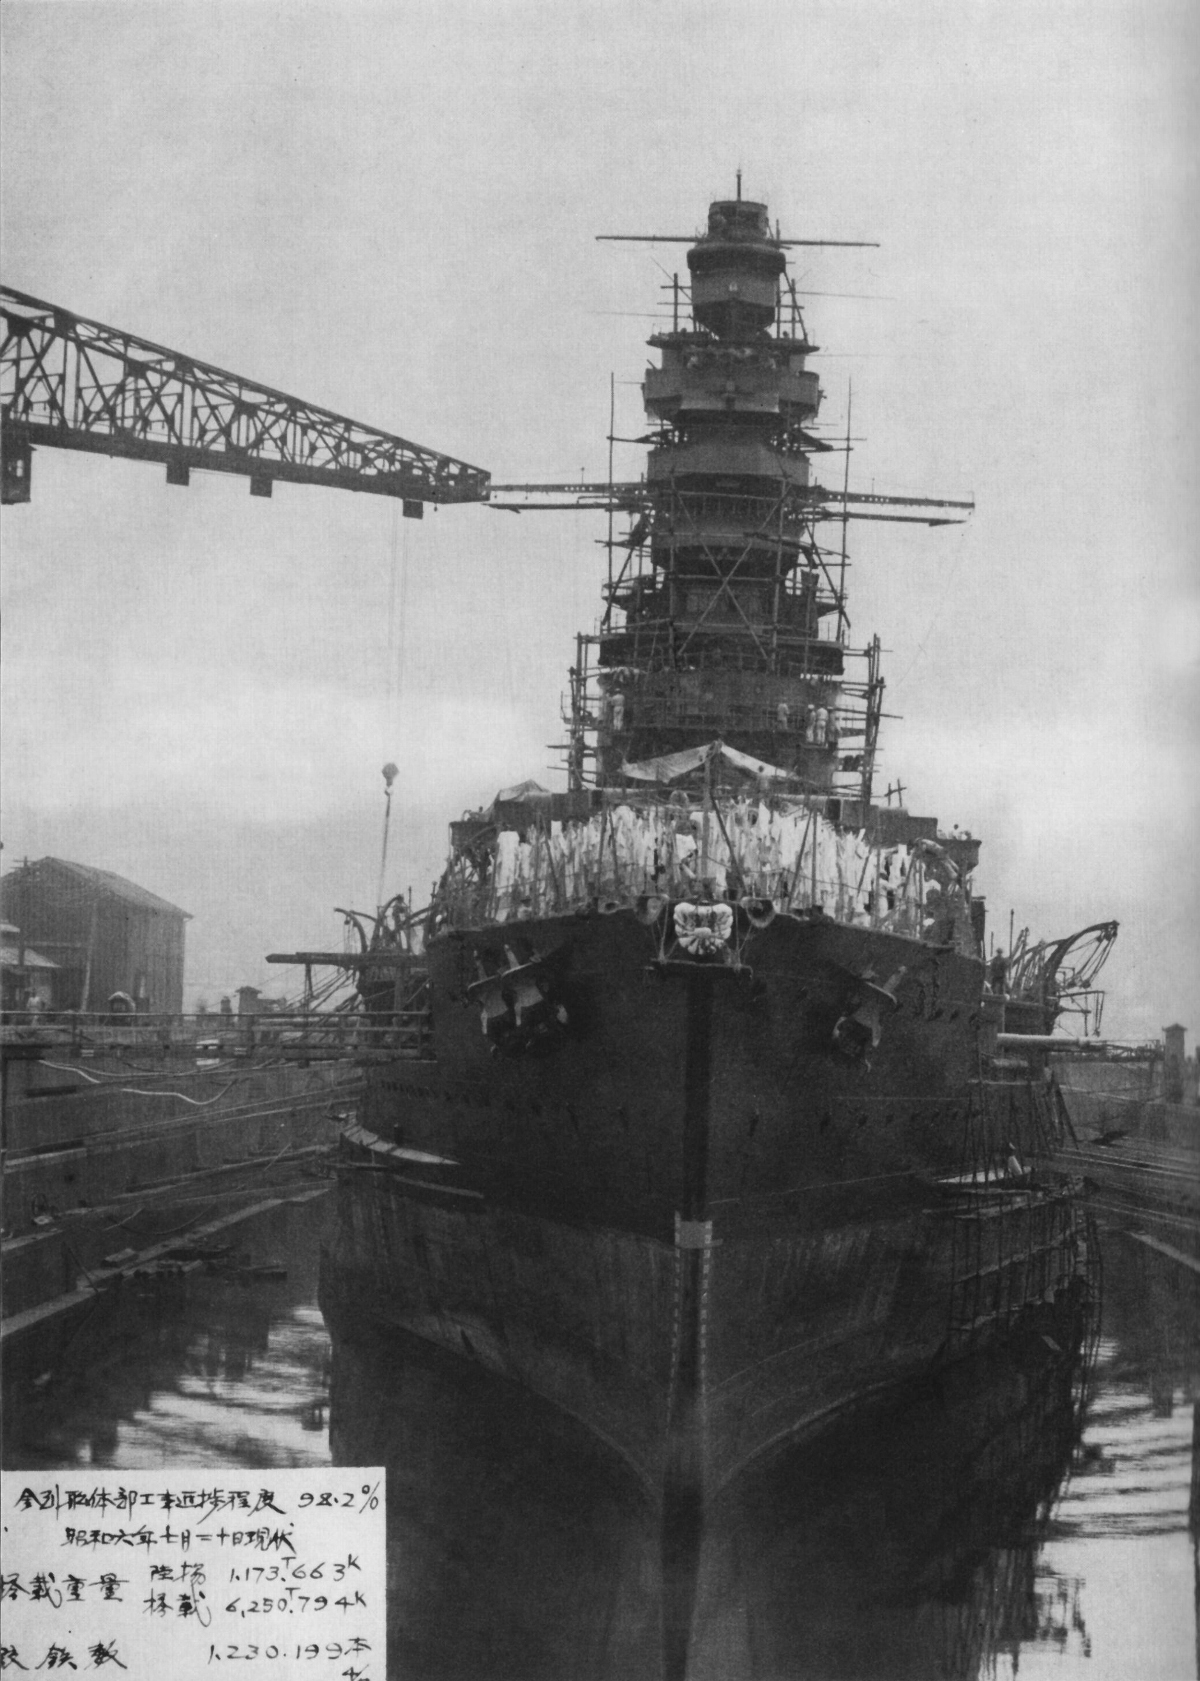 Kongo under reconstruction, Yokosuka, Japan, 20 Jul 1931; she was nearing completion